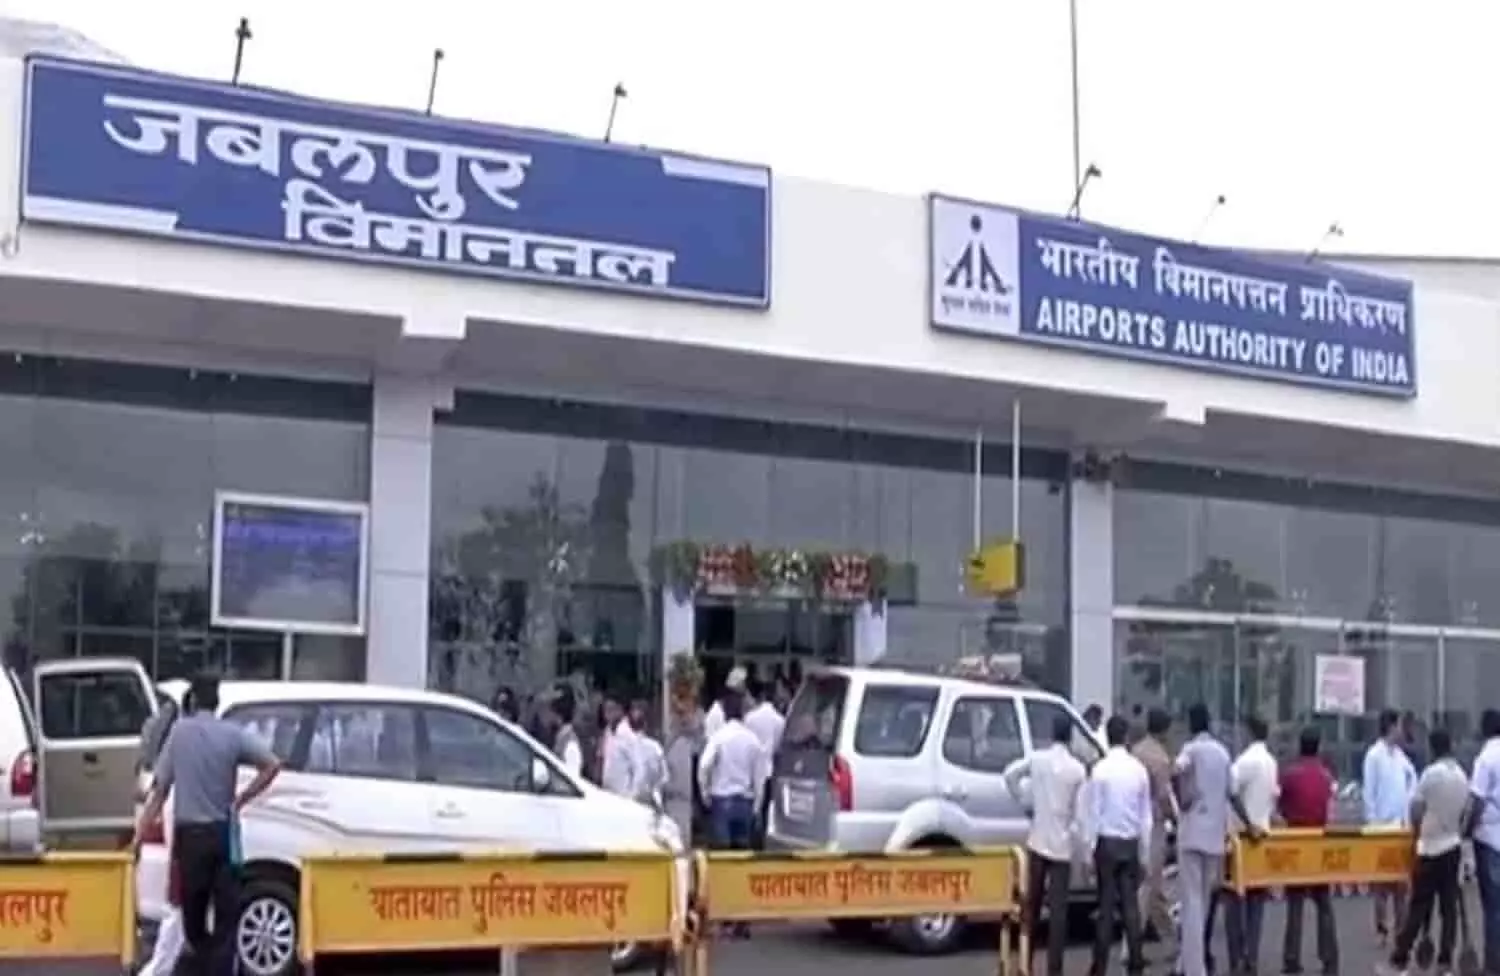 Dumna Airport Jabalpur